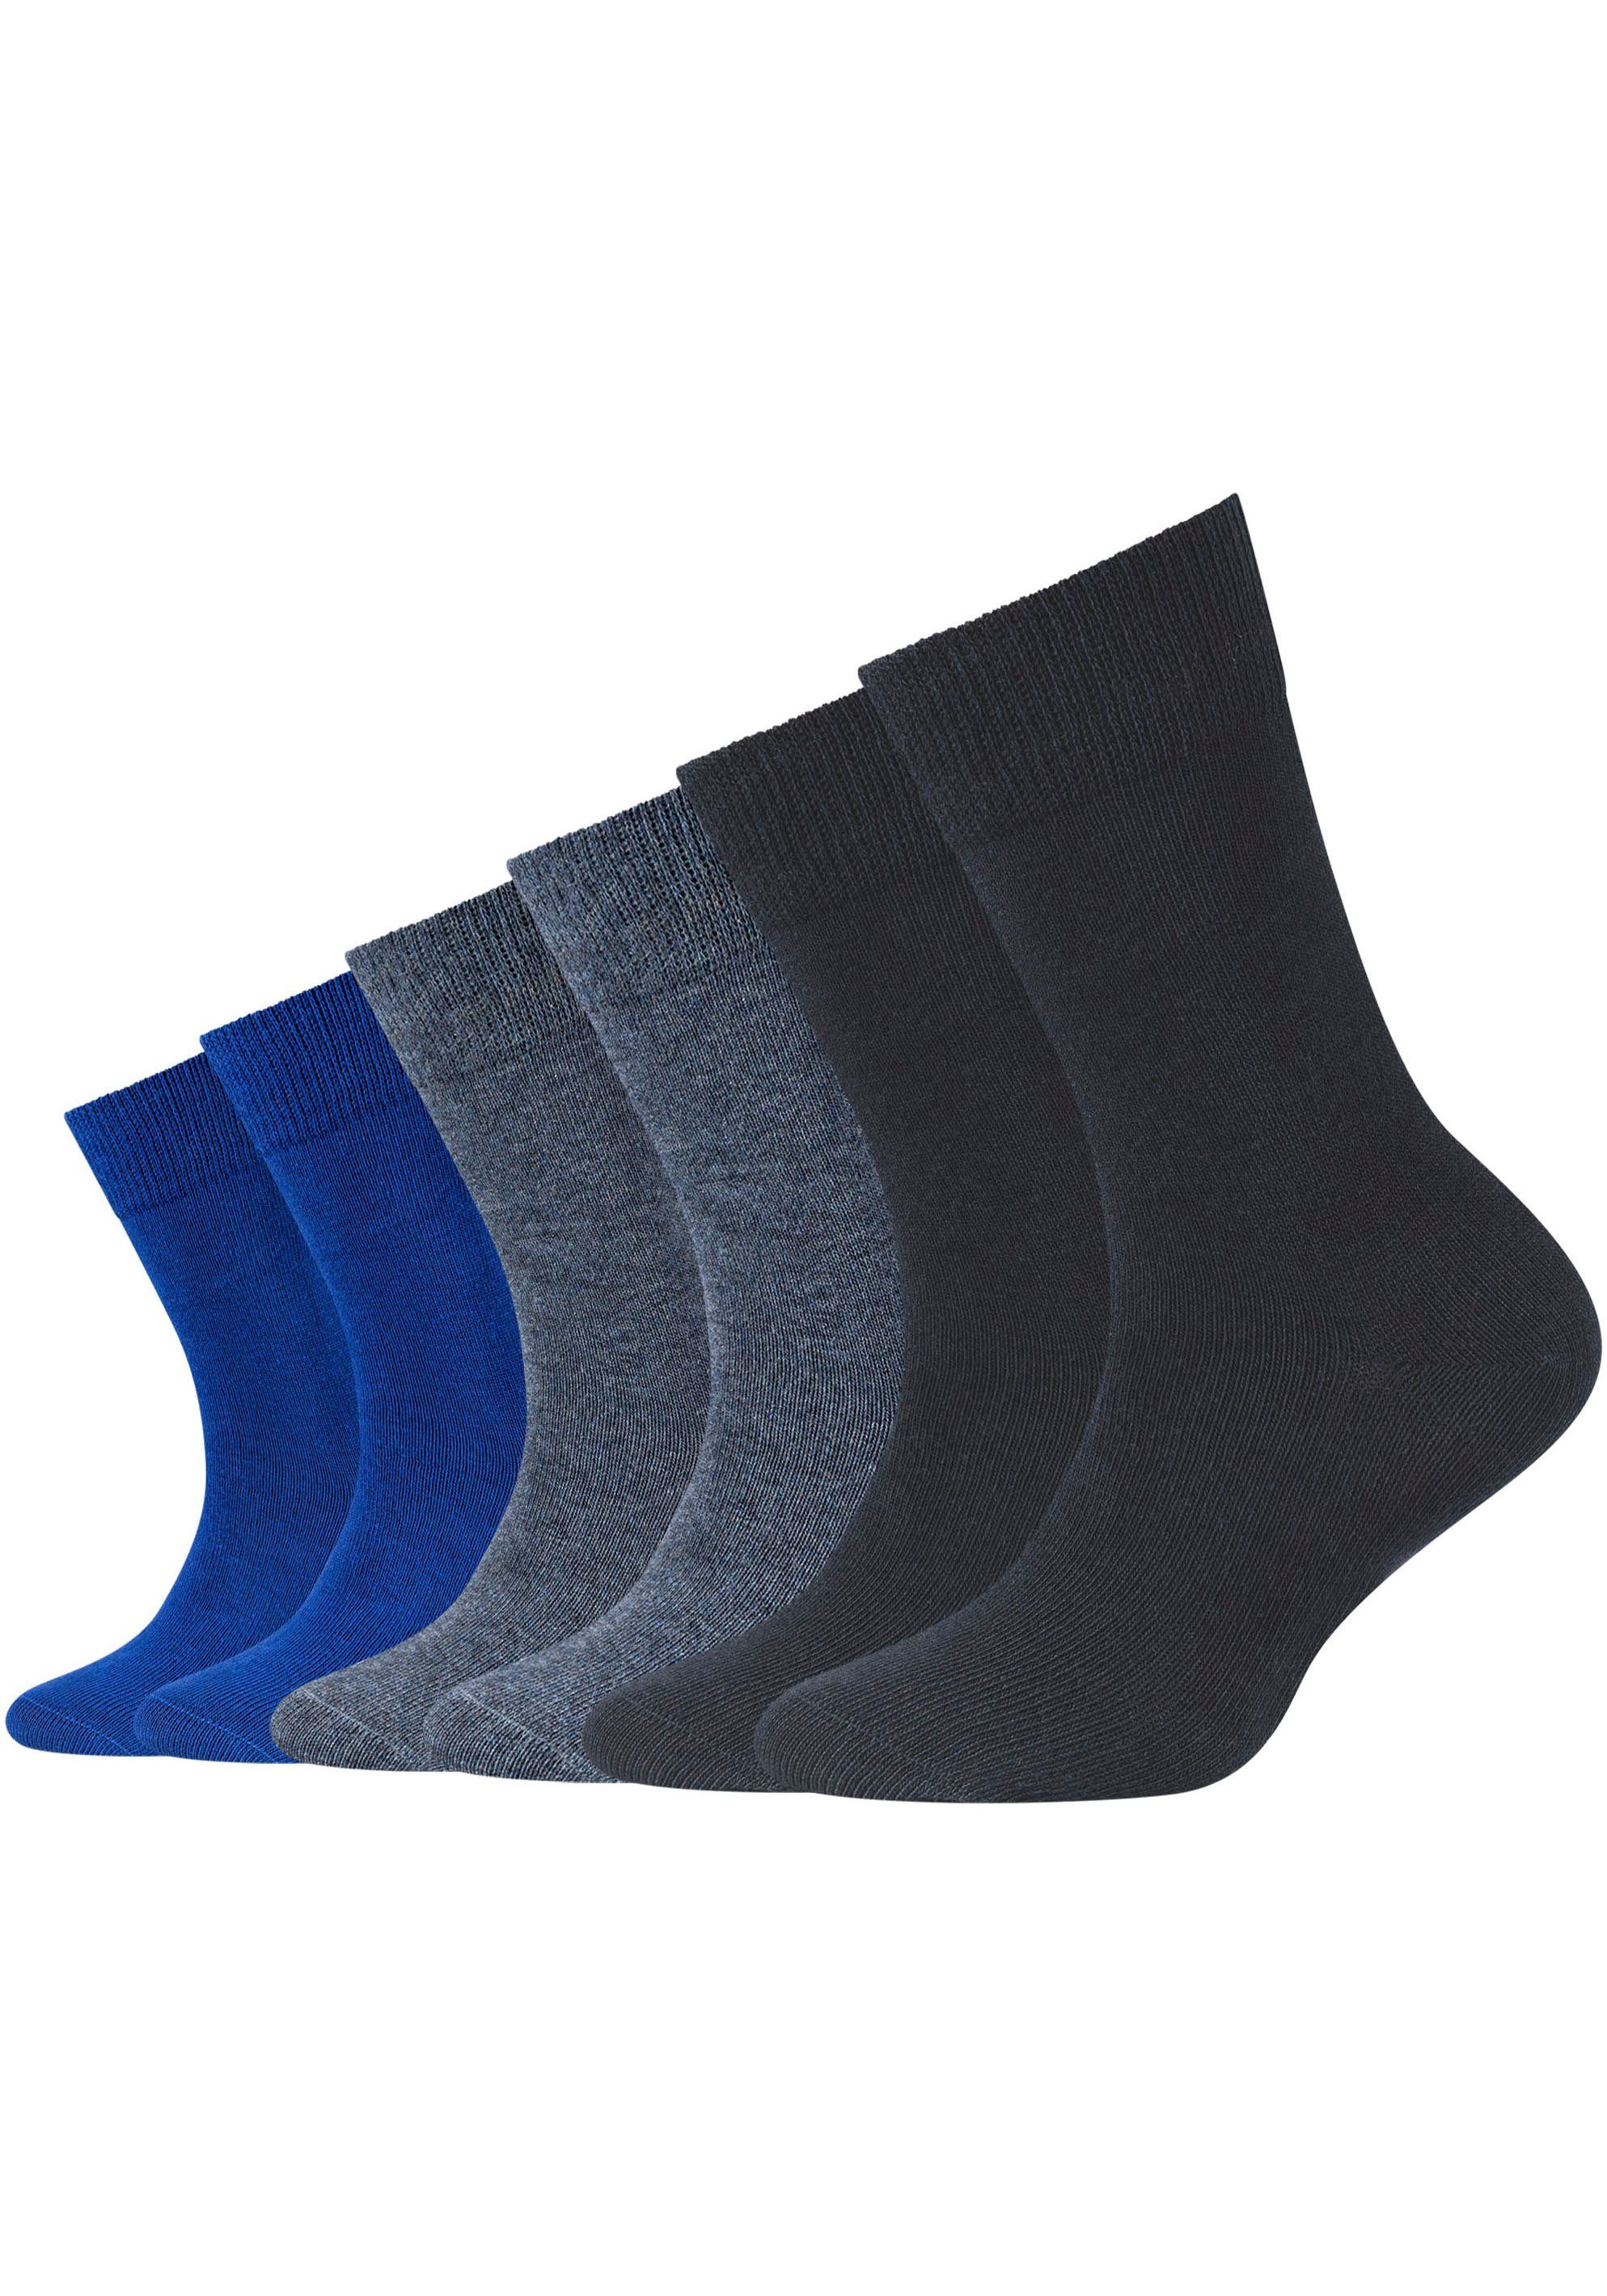 Camano Socken Ferse an bequem 6-Paar) (Packung, Hoher verstärkter und Baumwolle, Zehenspitze gekämmter dank Besonders Anteil